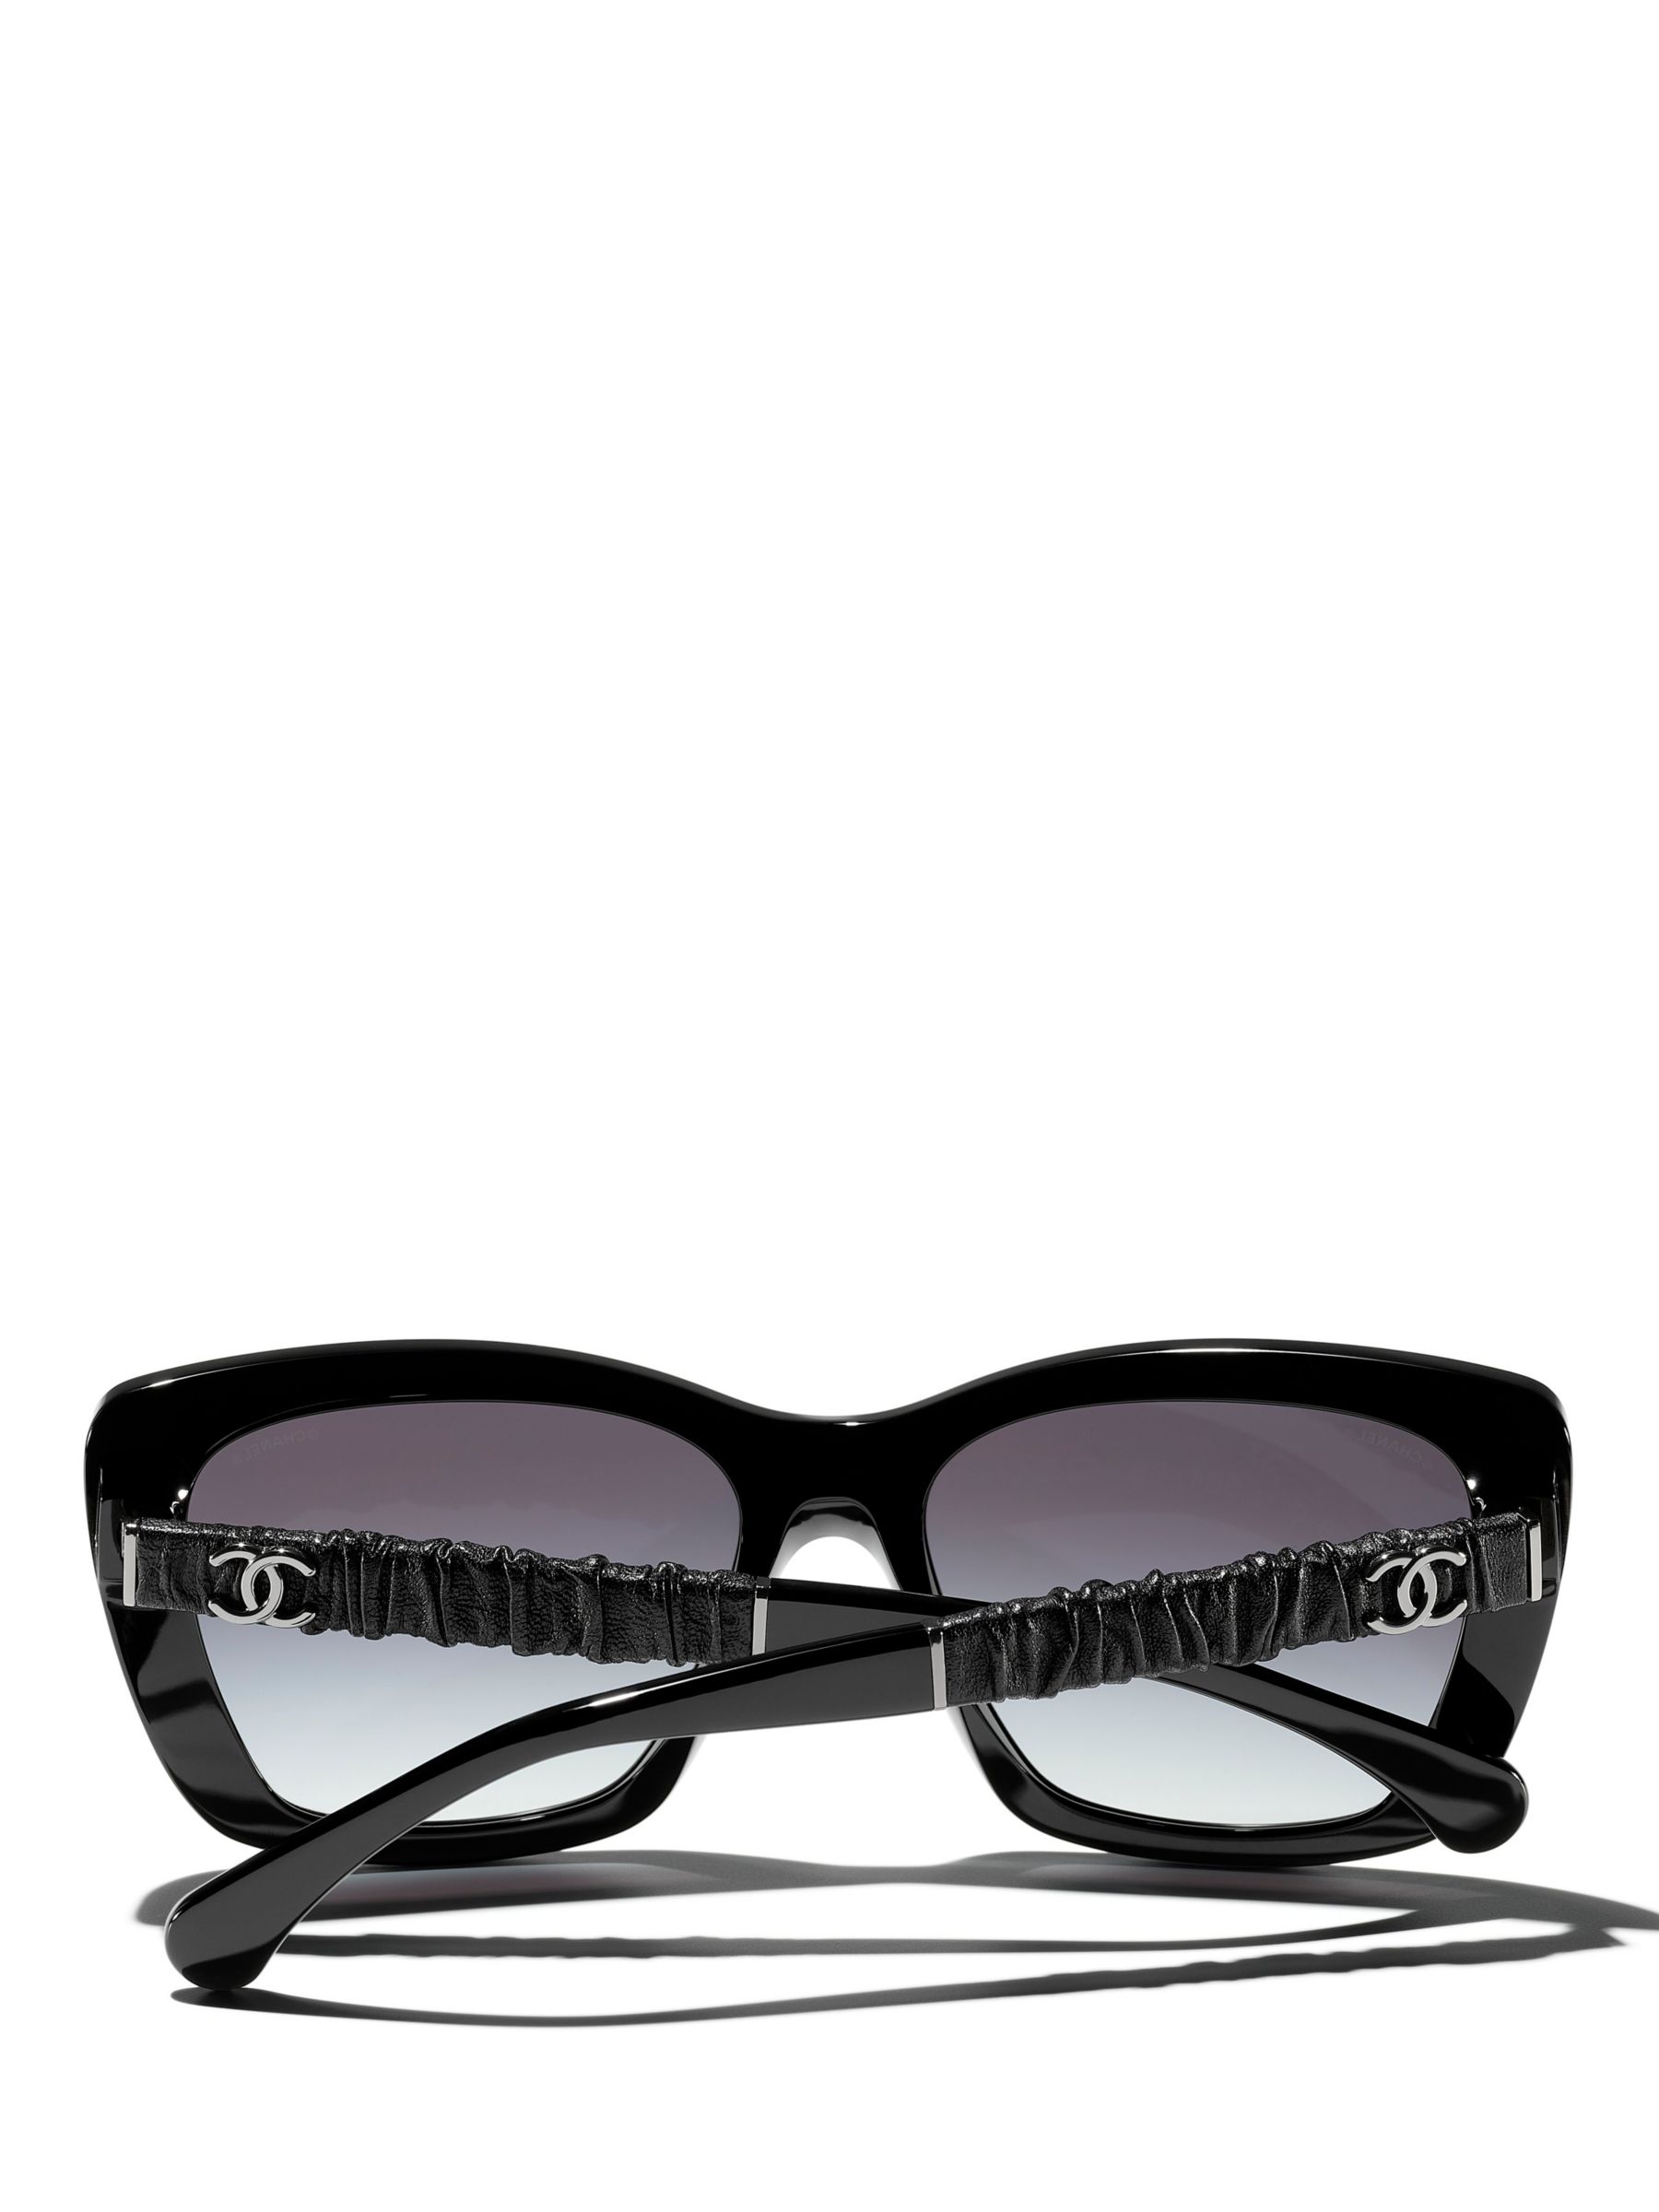 Buy CHANEL Irregular Sunglasses CH5476Q Shiny Black/Blue Gradient Online at johnlewis.com